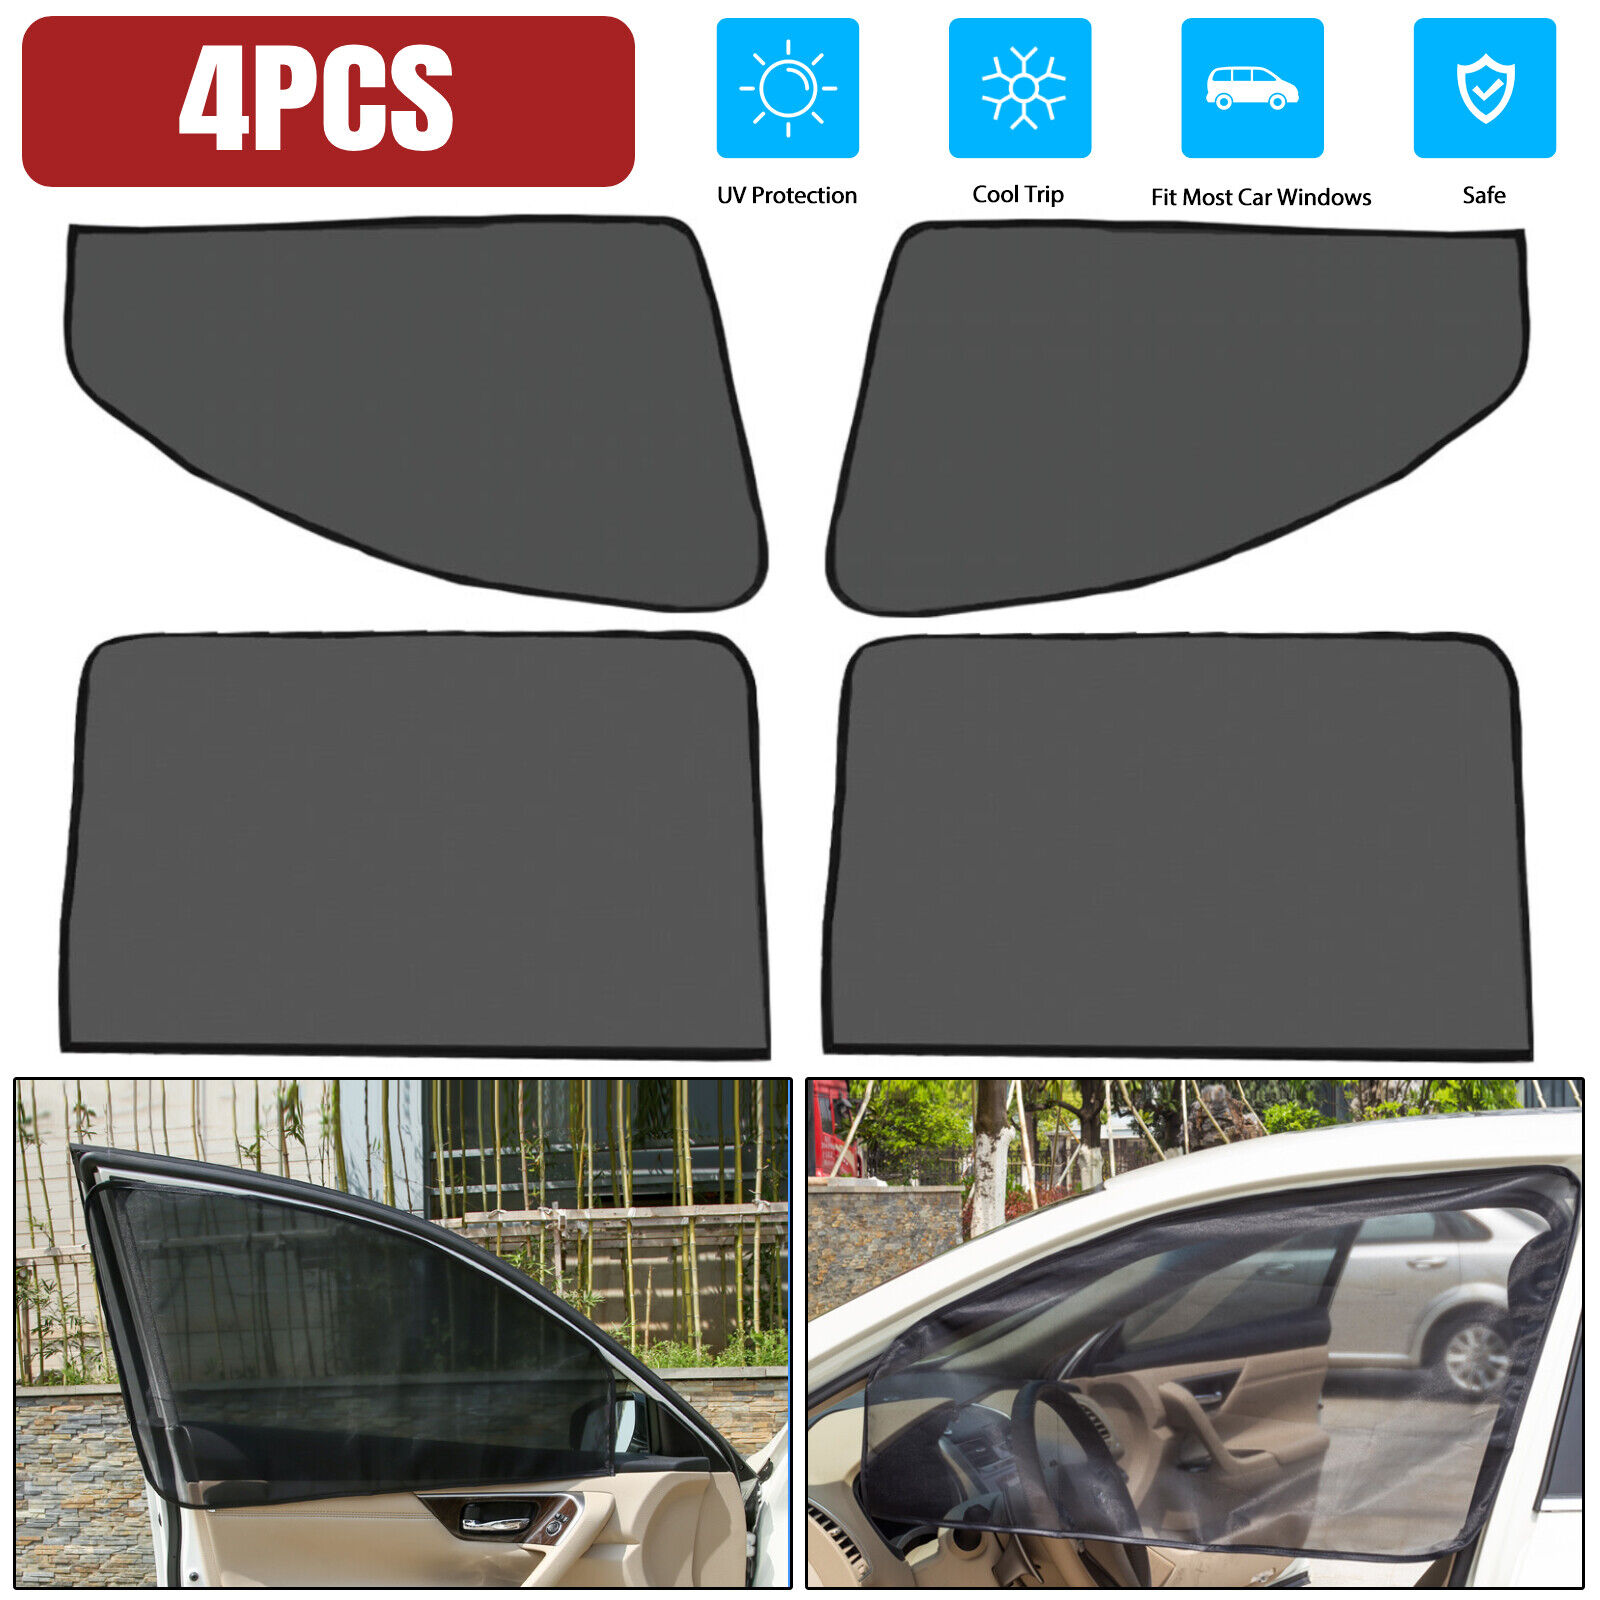 4PCS Car Side Window Sun Shade Cover Visor Mesh Shield UV Block Sunshade Screen